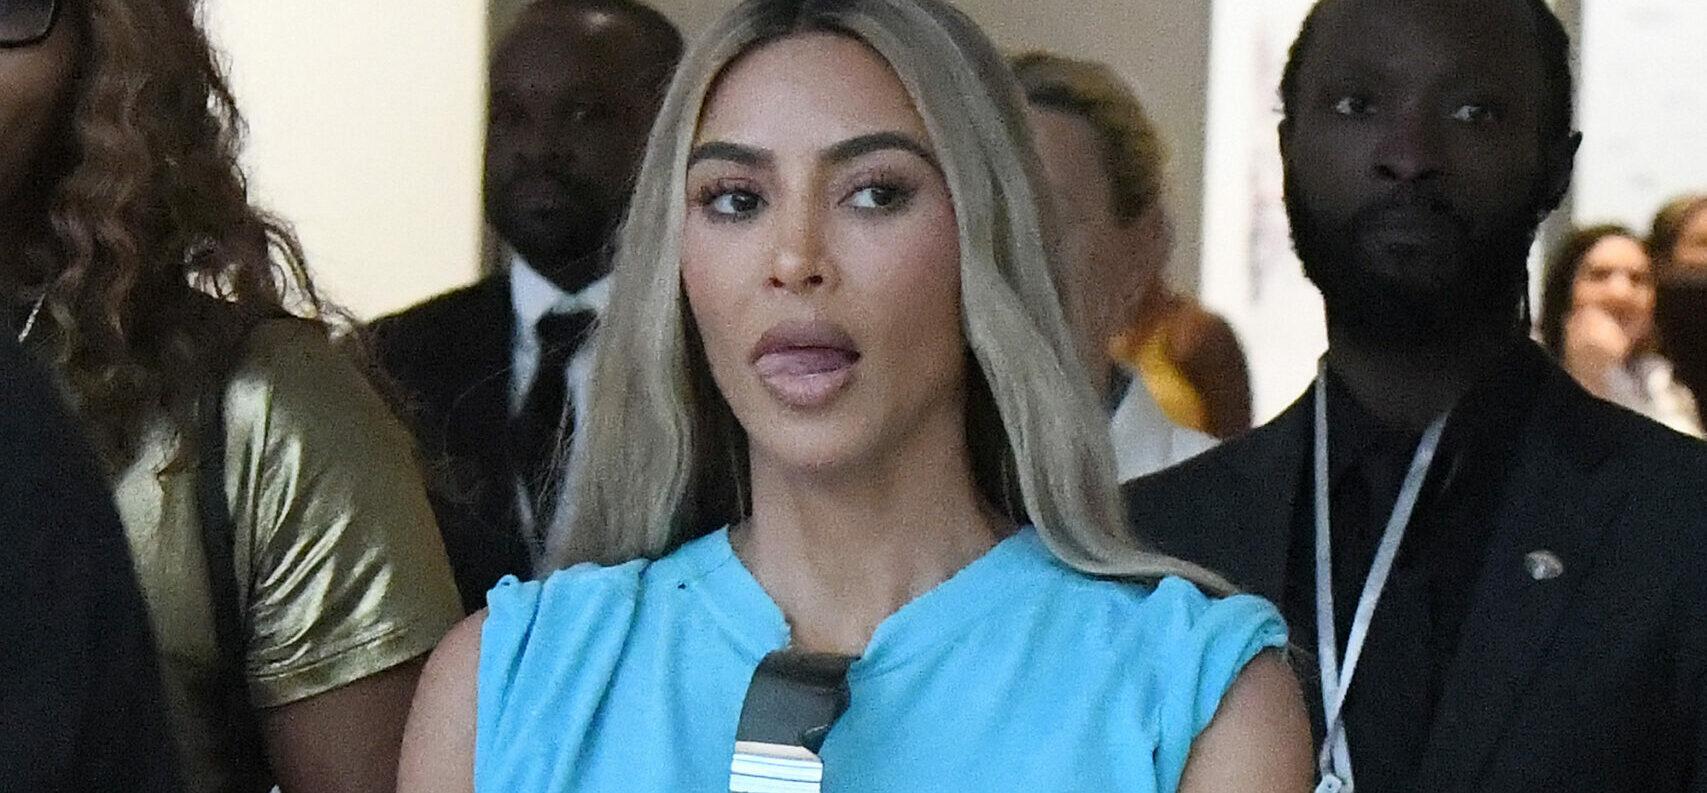 Kim Kardashian gets mocked on Twitter over kids' pictures